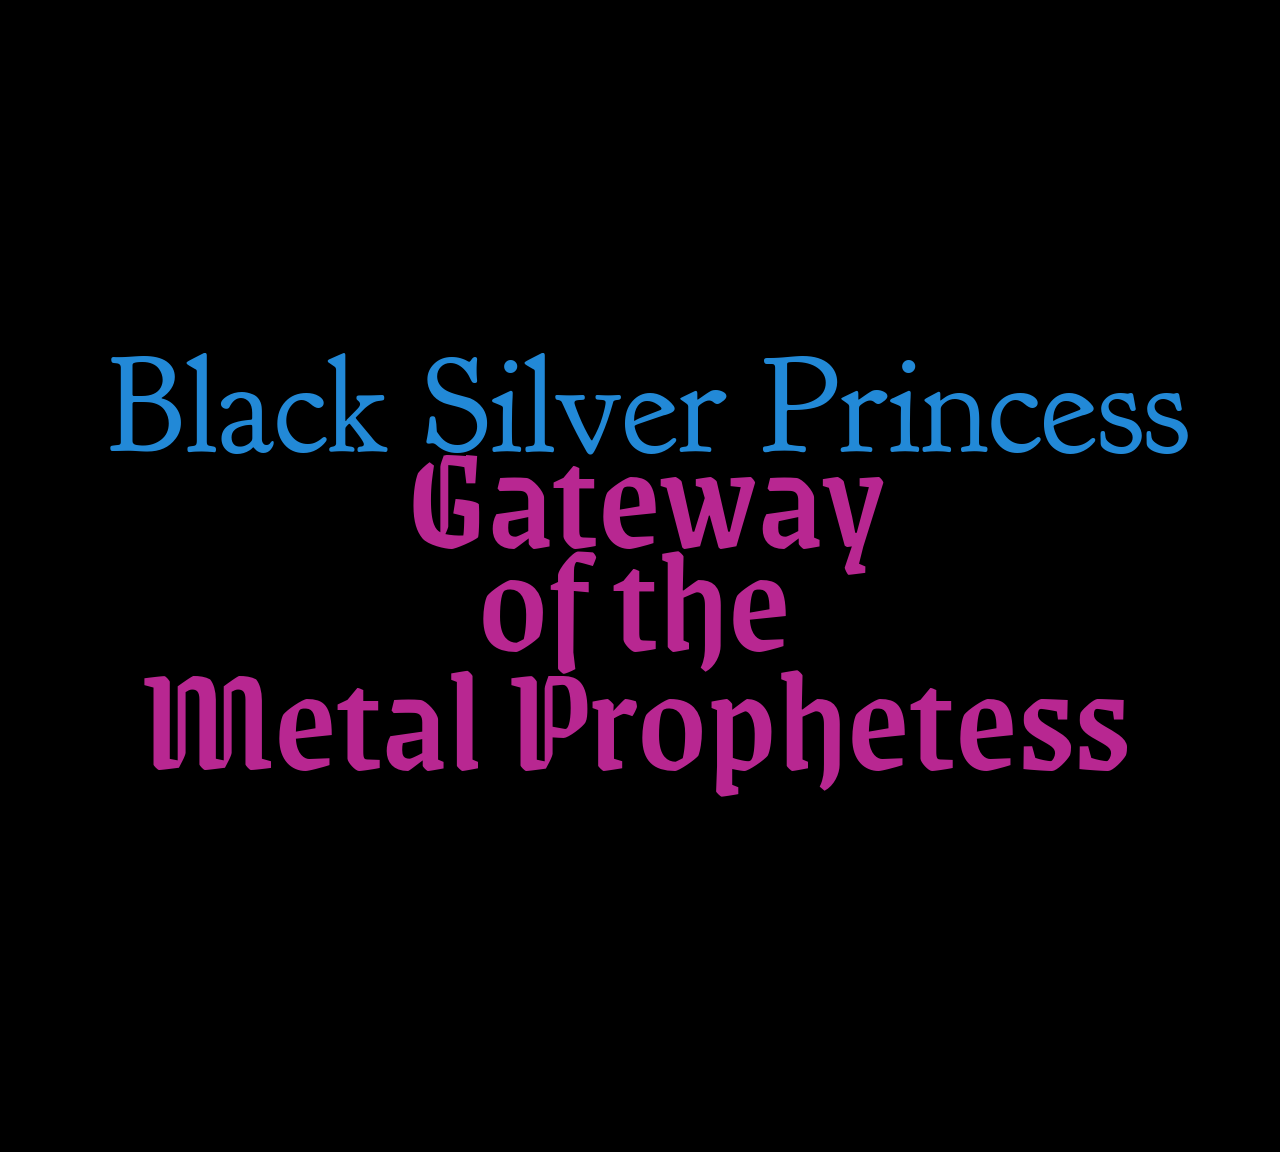 Black Silver Princess: Gateway of the Metal Prophetess